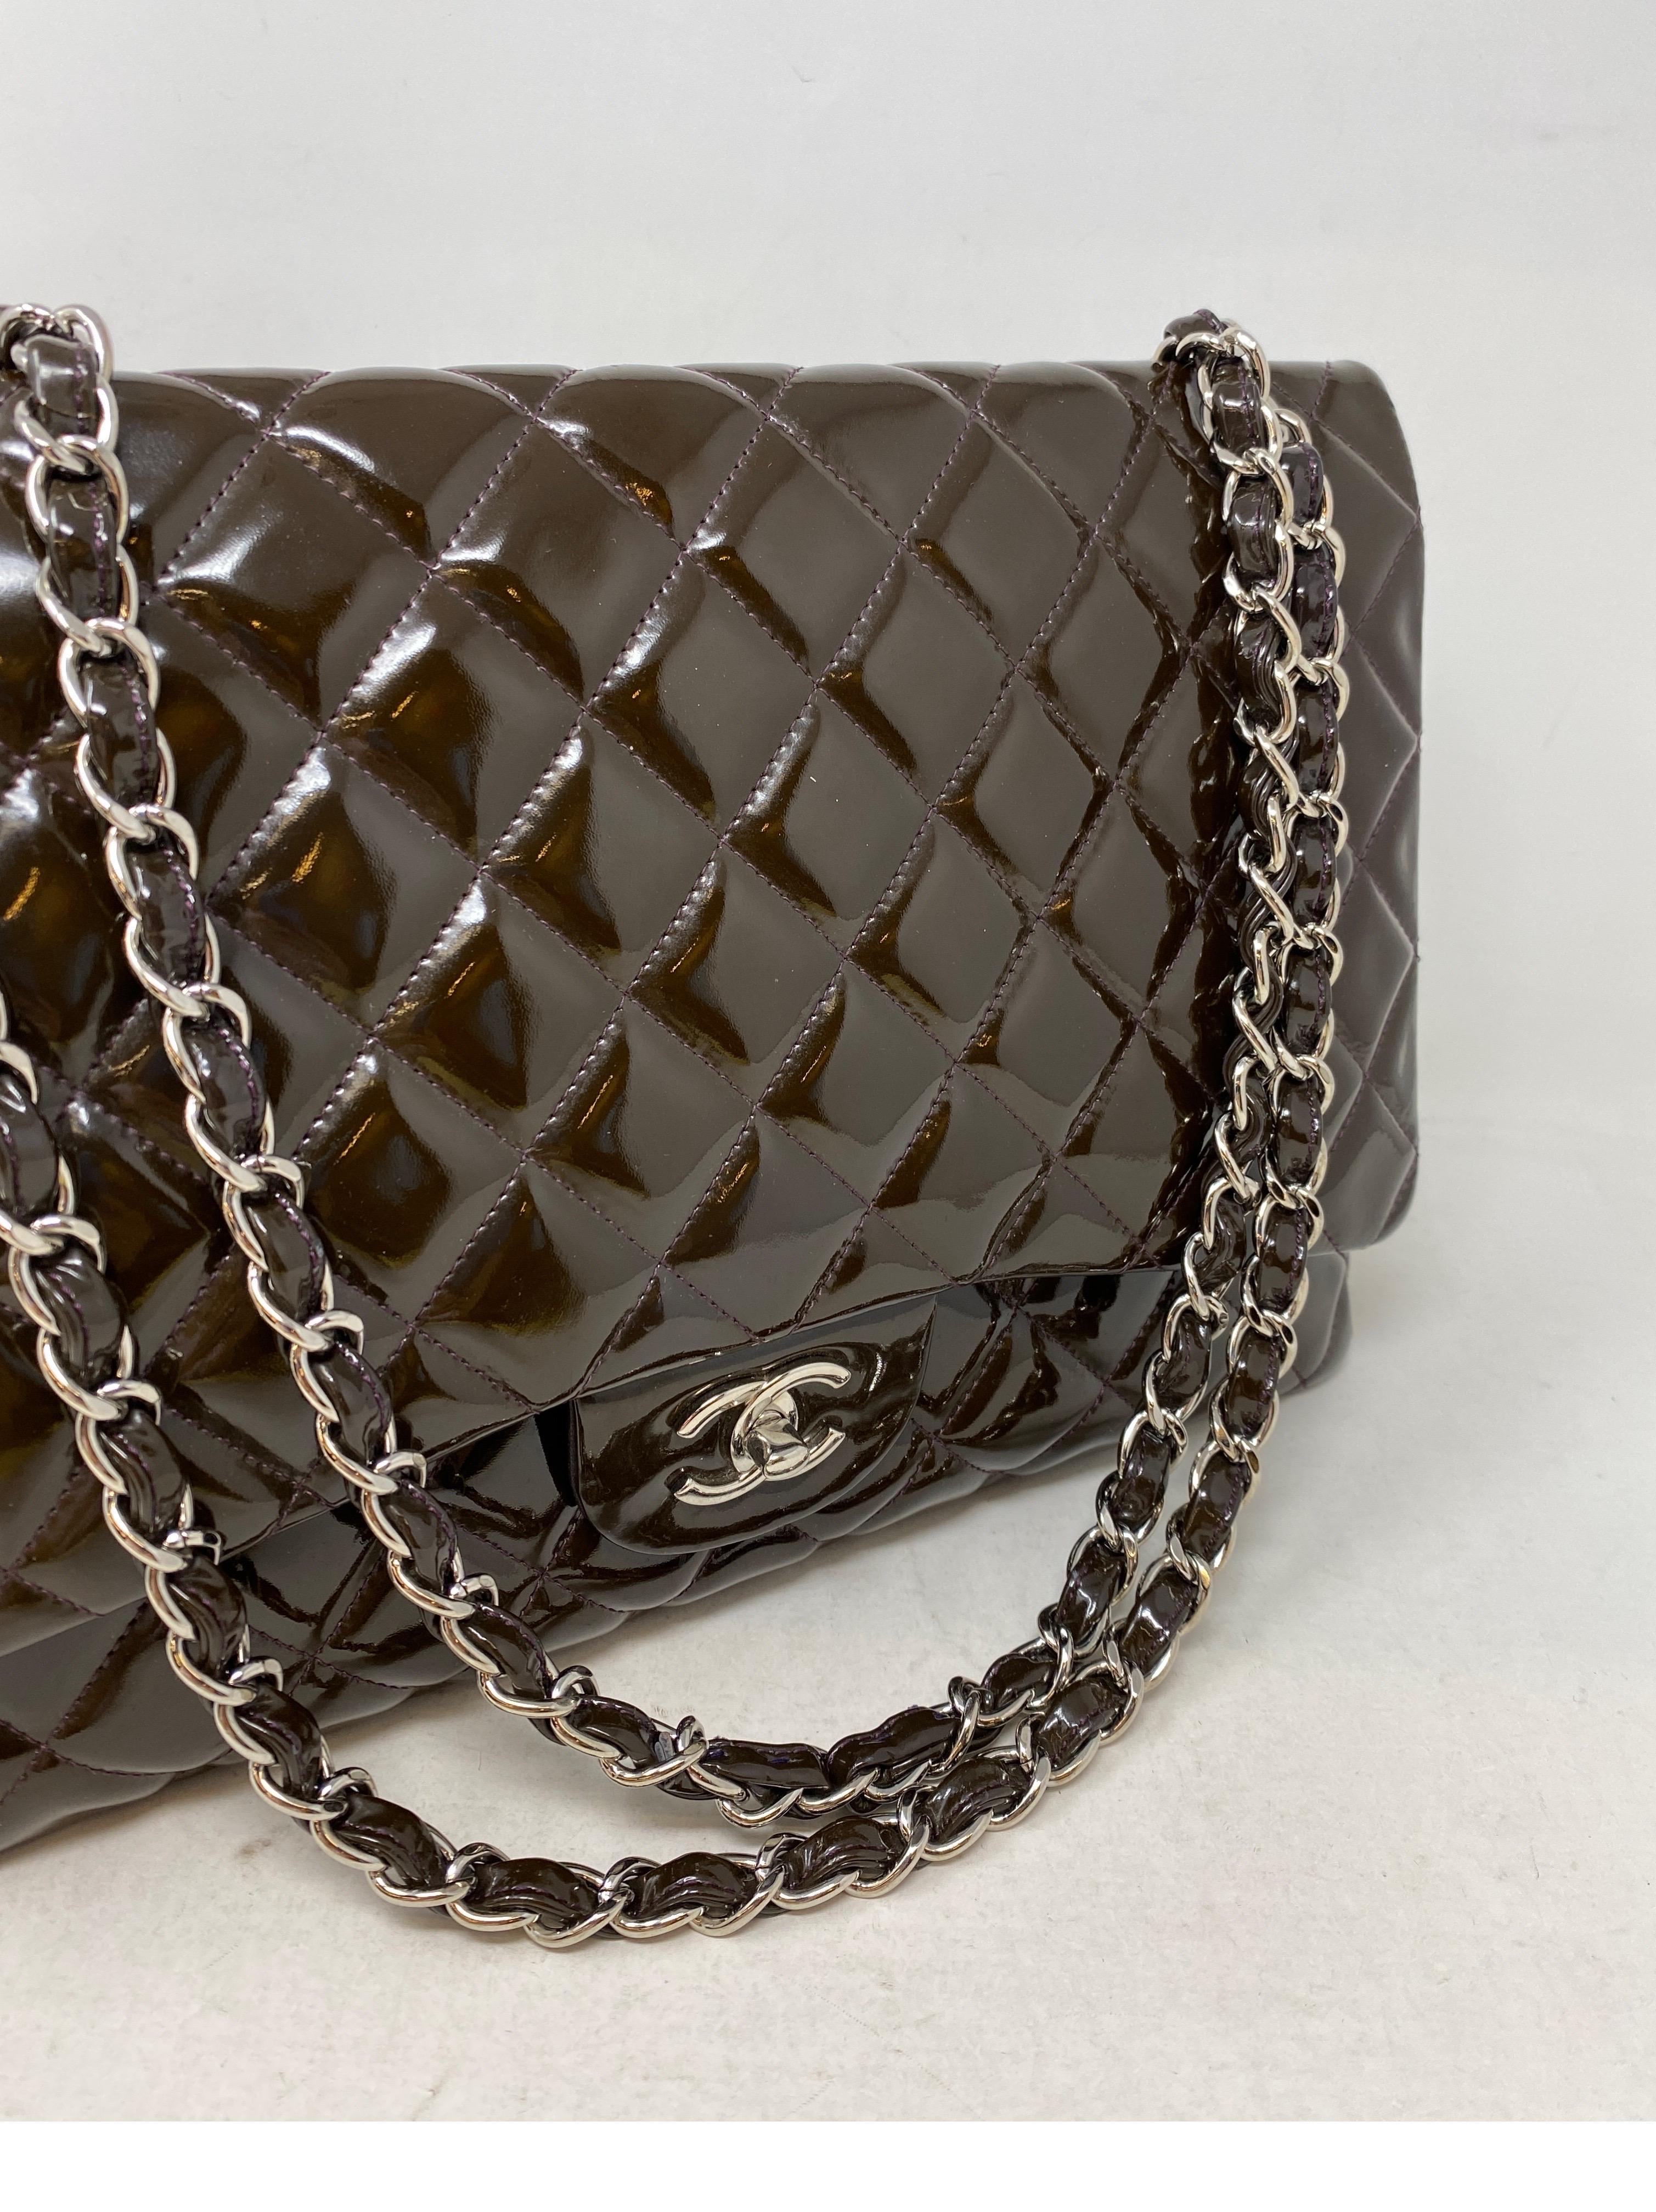 Chanel Jumbo Patent Leather Brown Bag  10